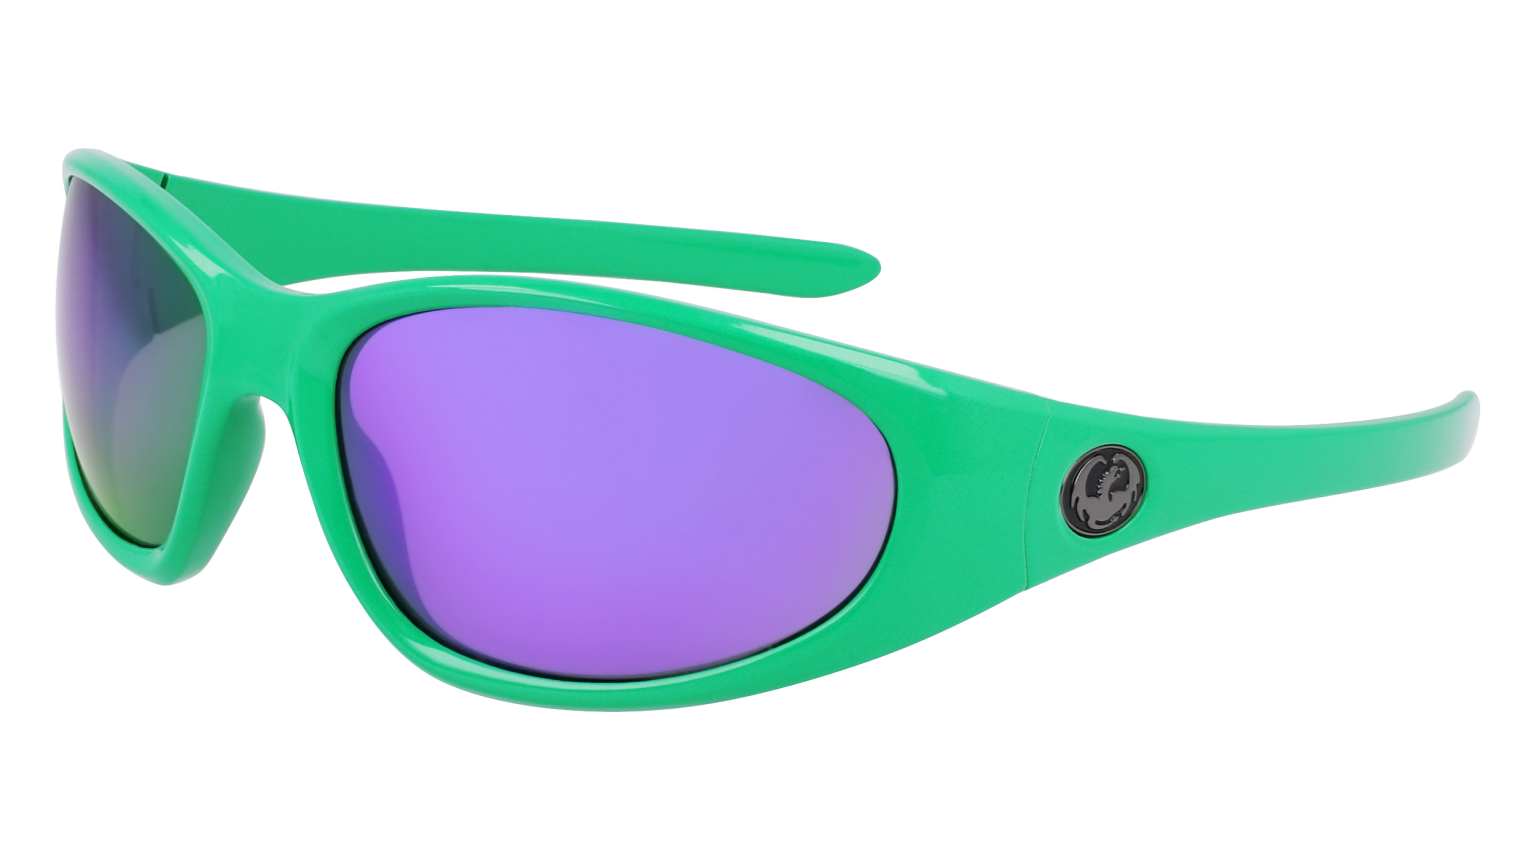 THE BOX 2 - Shiny Dew with Lumalens Purple Ionized Lens